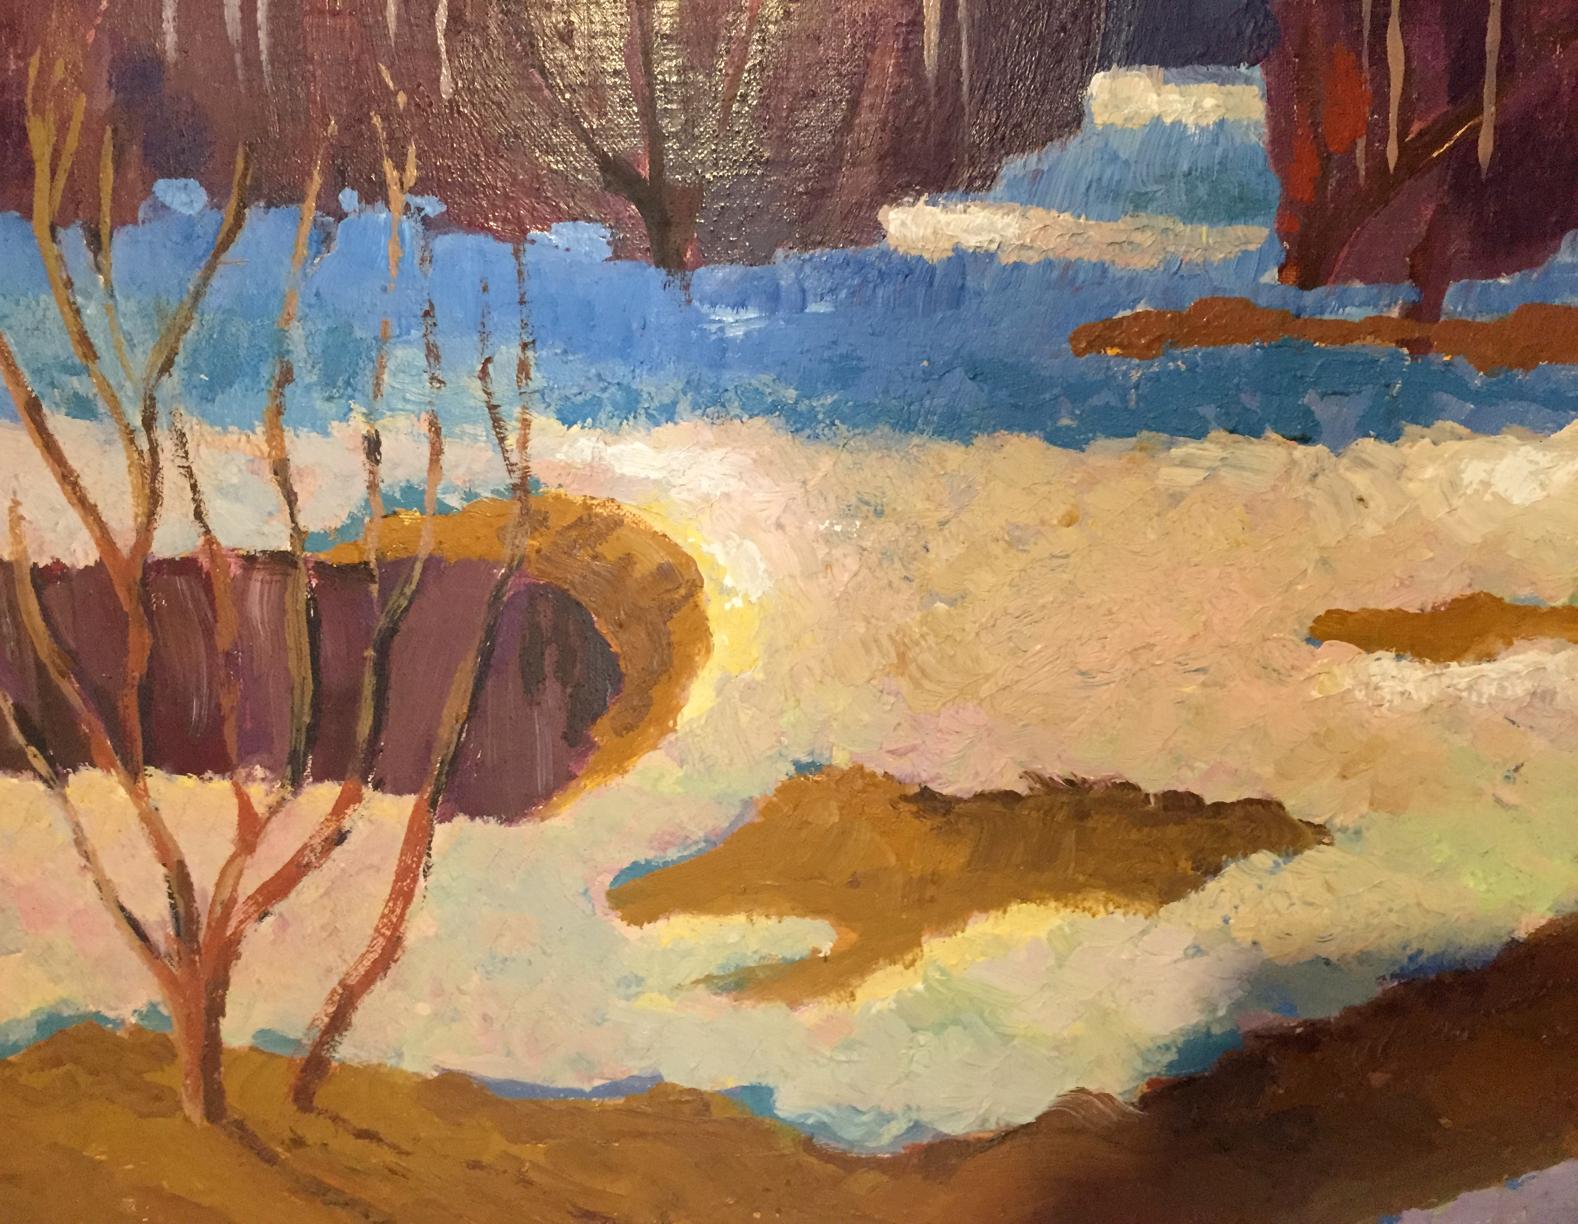 Vasily Kudrin's oil canvas depicts snow in turmoil